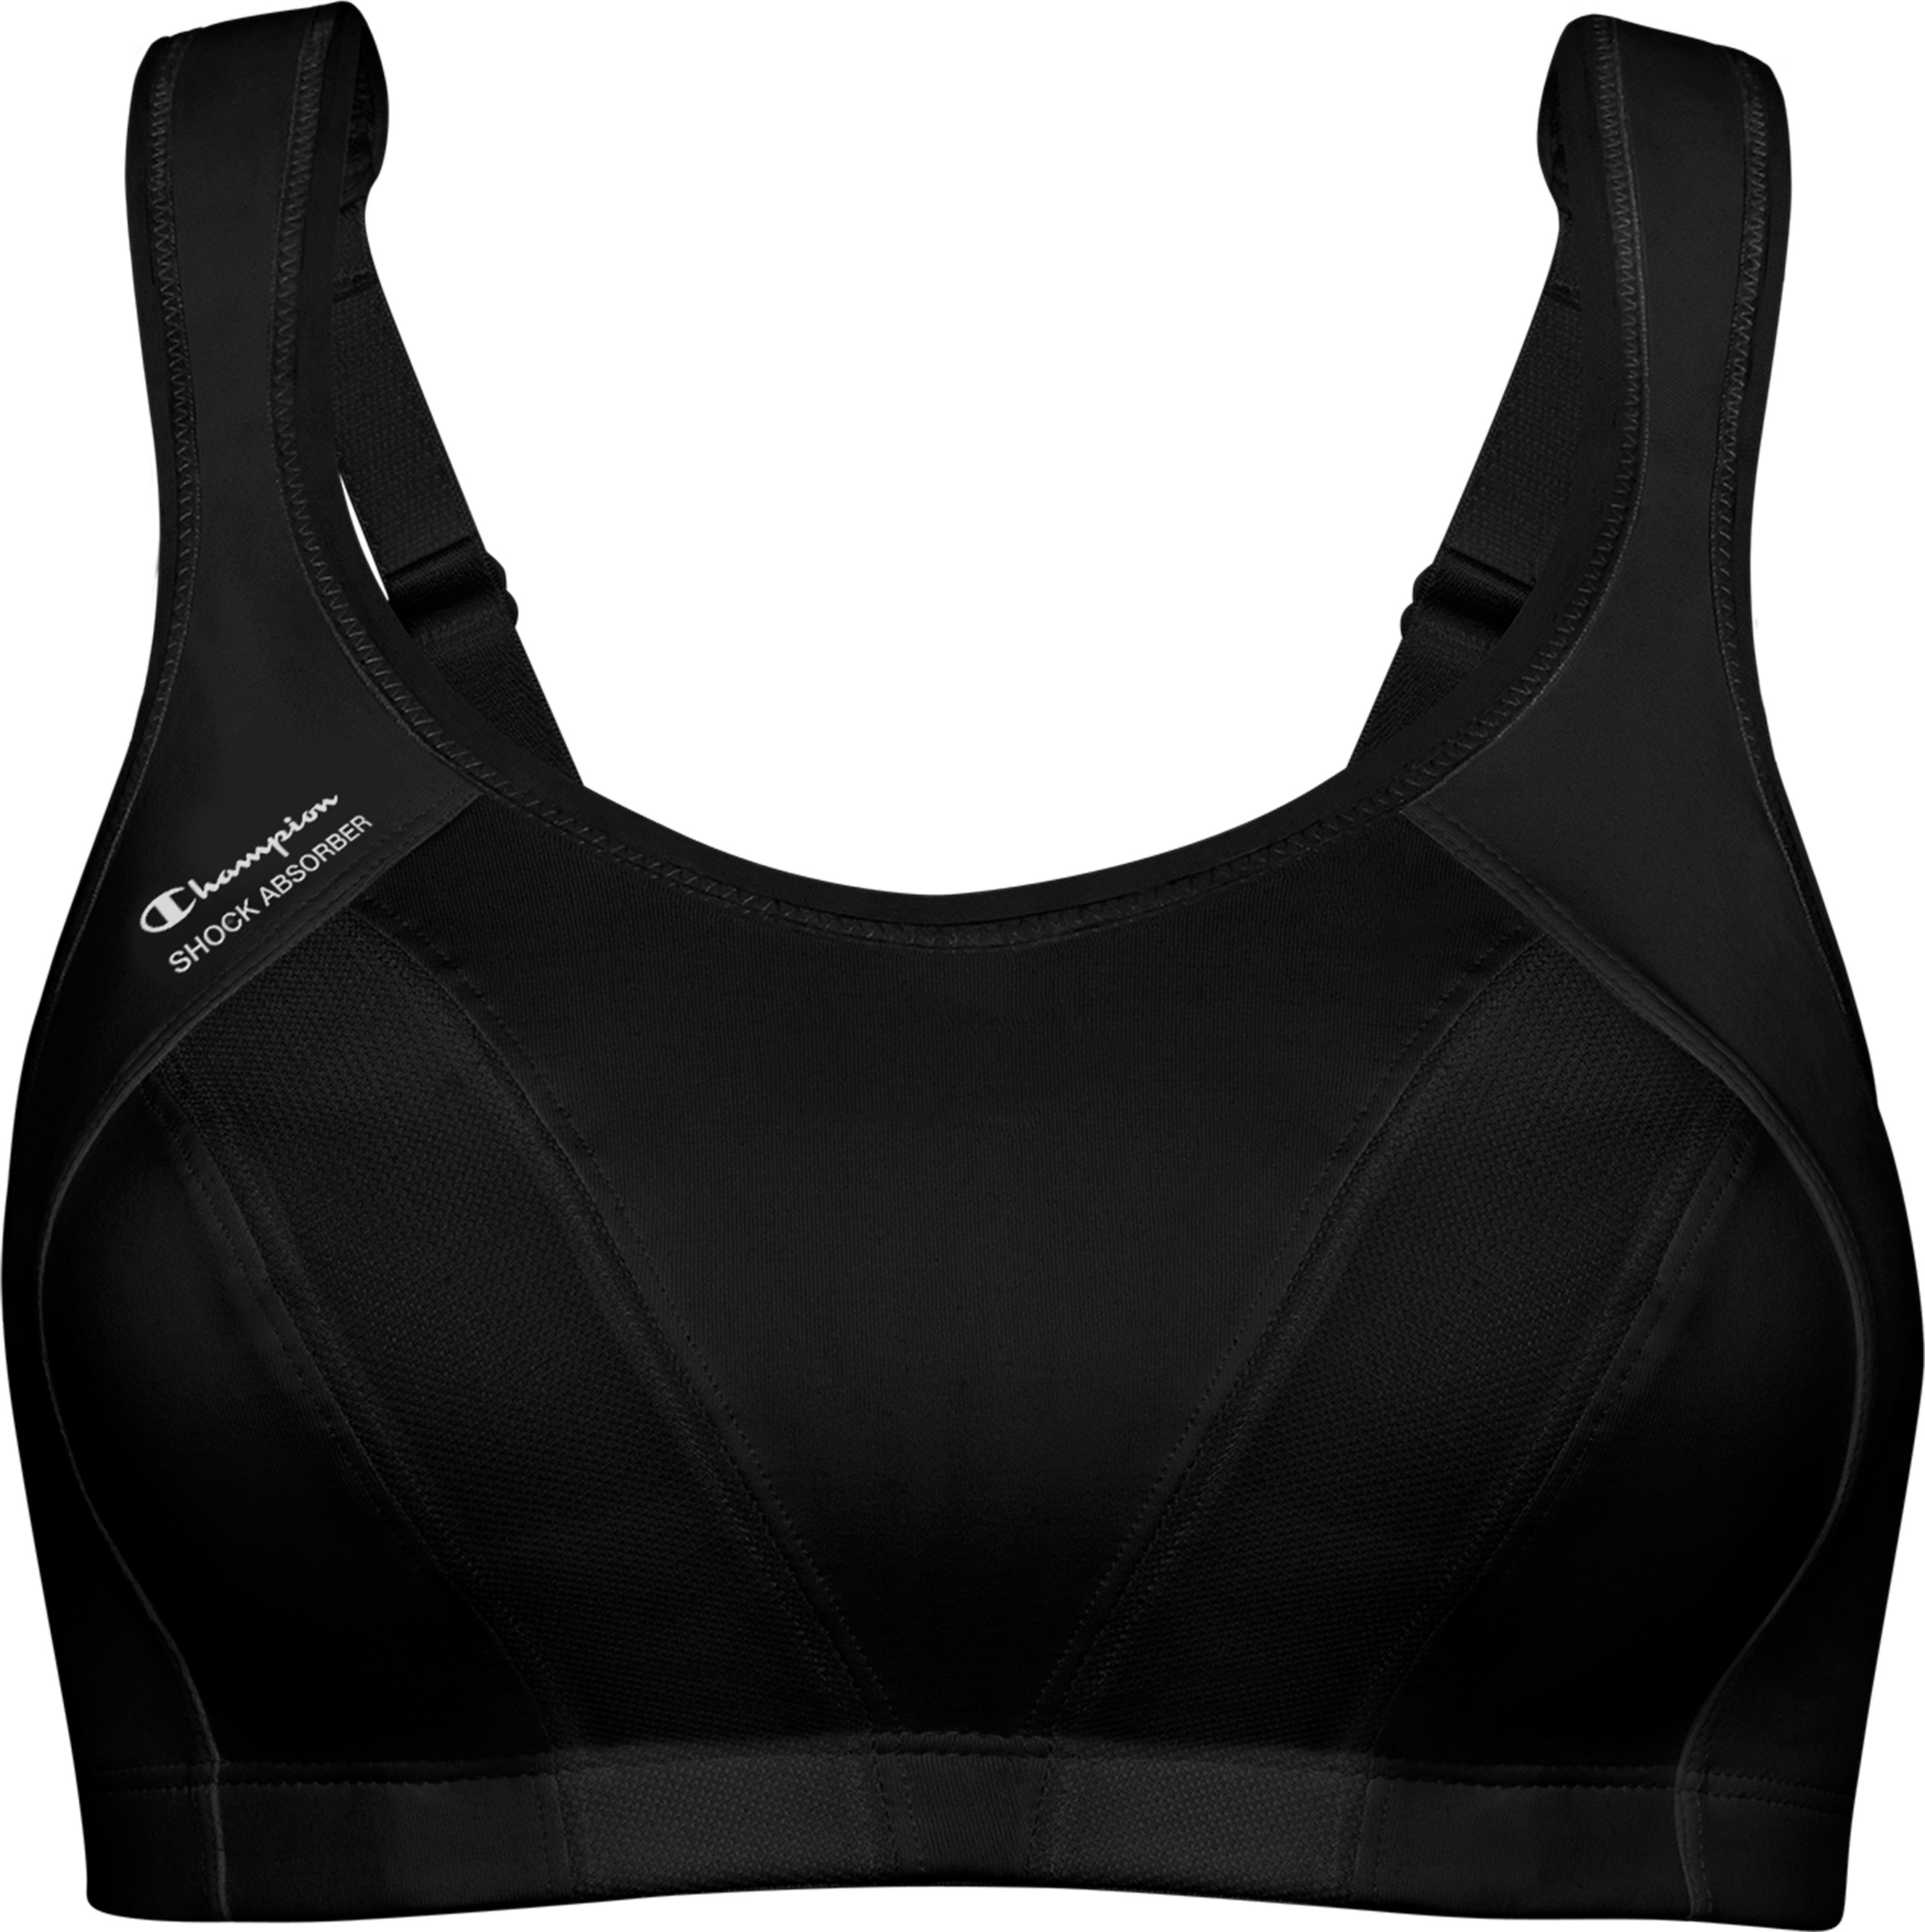 https://www.fjellsport.no/assets/blobs/shock-absorber-women-s-active-multi-sport-bra-black-de250d2a10.jpeg